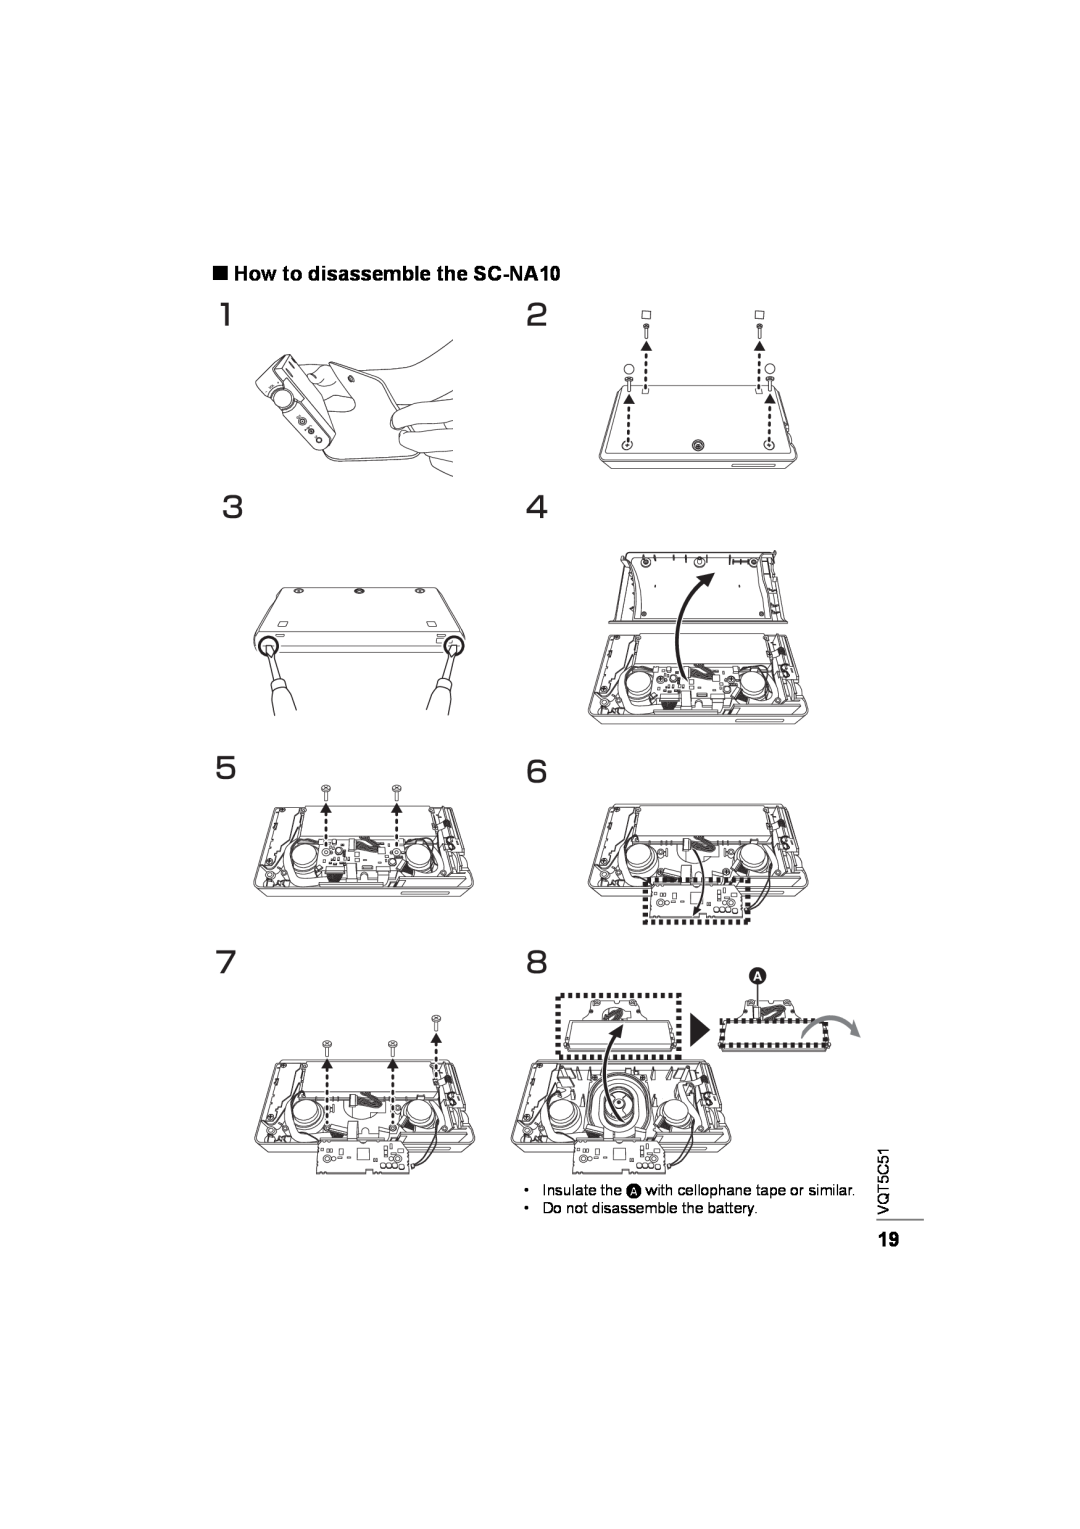 Panasonic SC-NA30/SC-NA10 manual How to disassemble the SC-NA10 